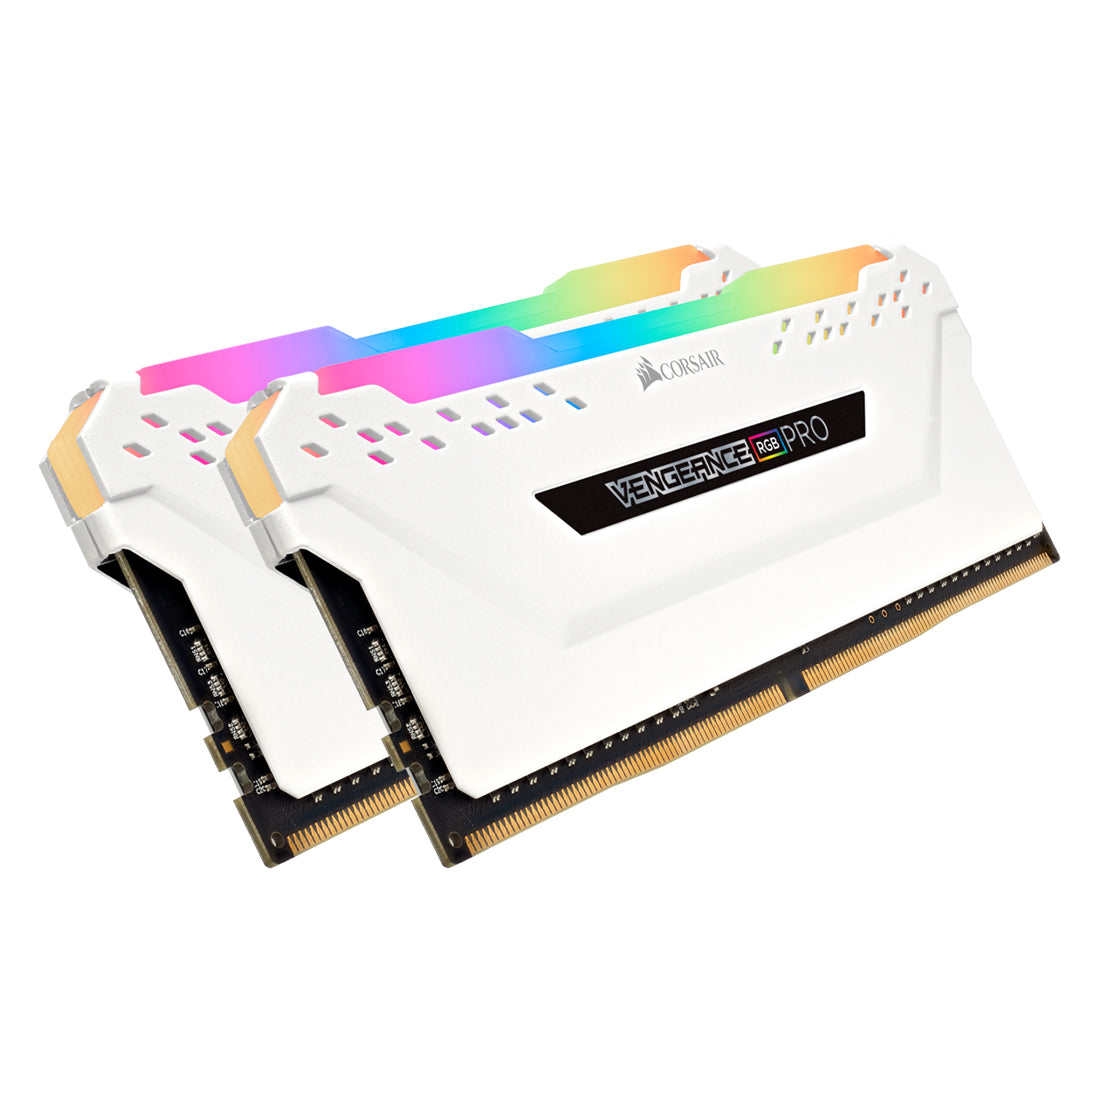 Corsair Vengeance RGB Pro 32GB (2x16GB) DDR4 RAM 3000MHz Desktop Memory